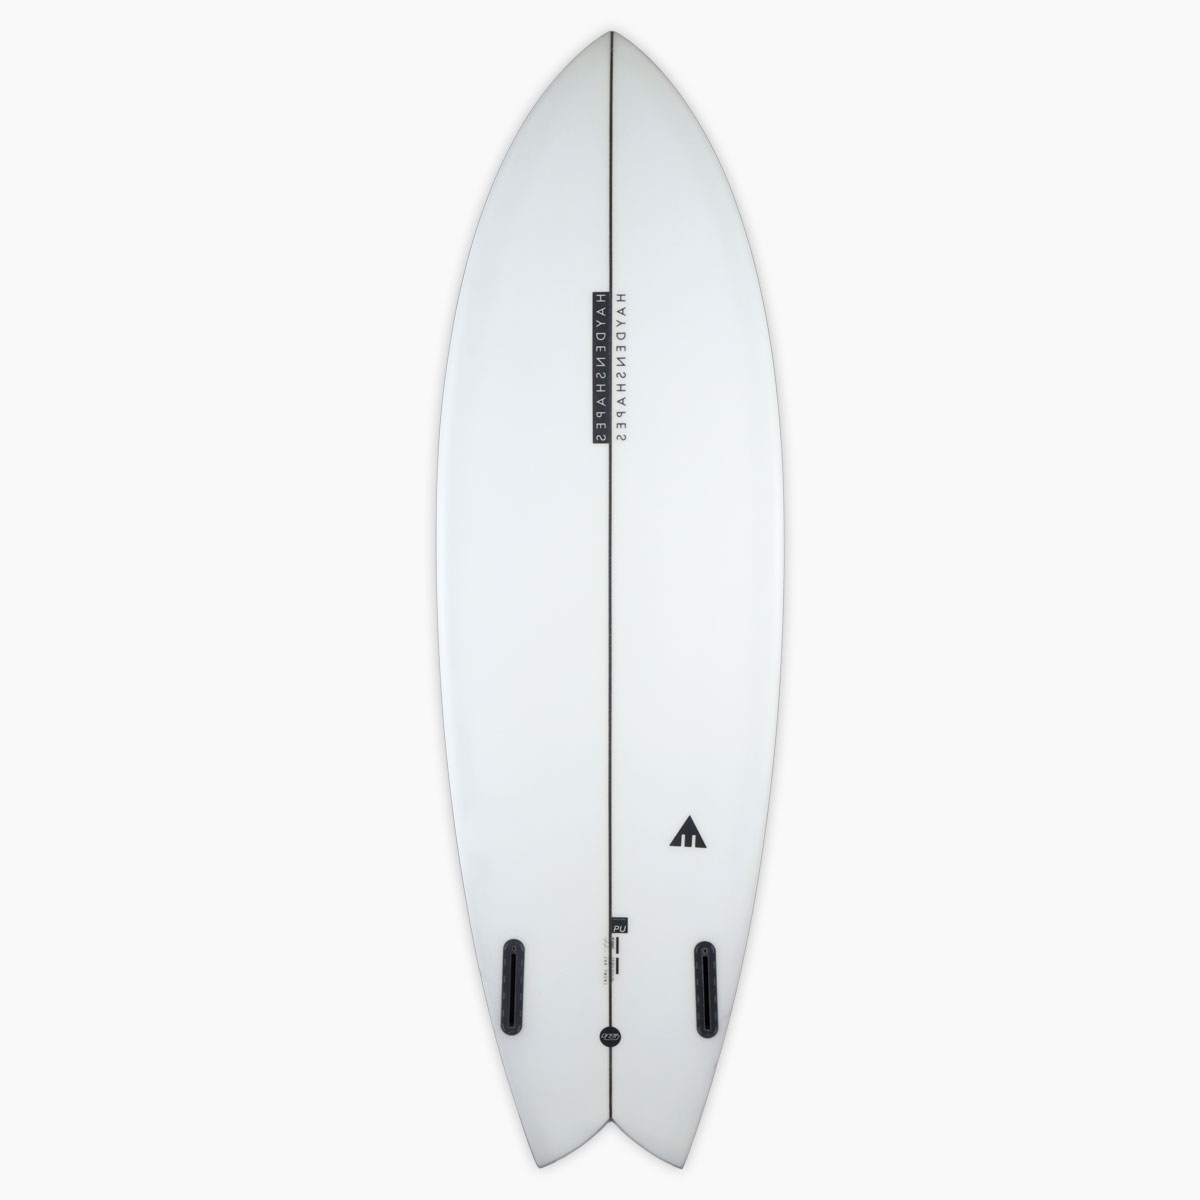 SurfBoardNet / ブランド:HAYDEN SHAPES モデル:HYPTO KRYPTO TWIN PU 